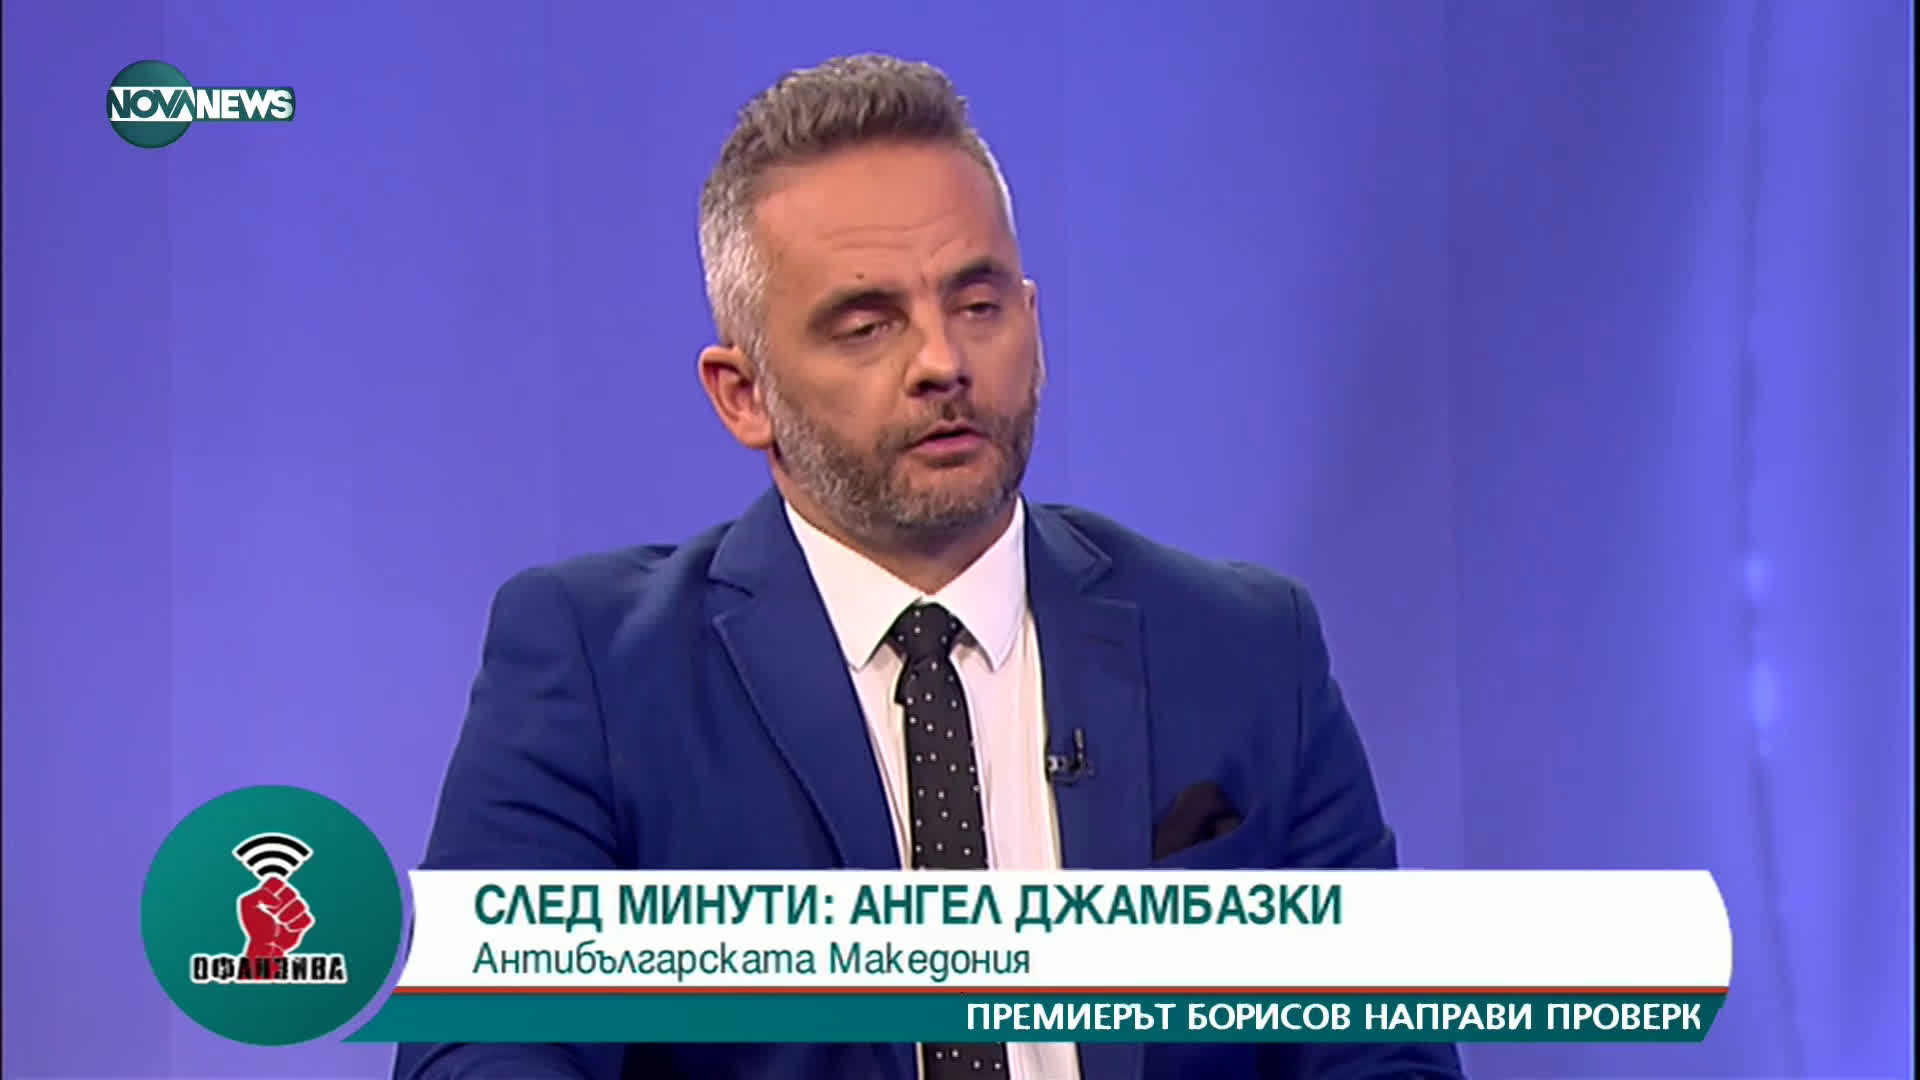 Стойчо Стойчев: "Има такъв народ" ще покрепи някого, но няма да участва в управление